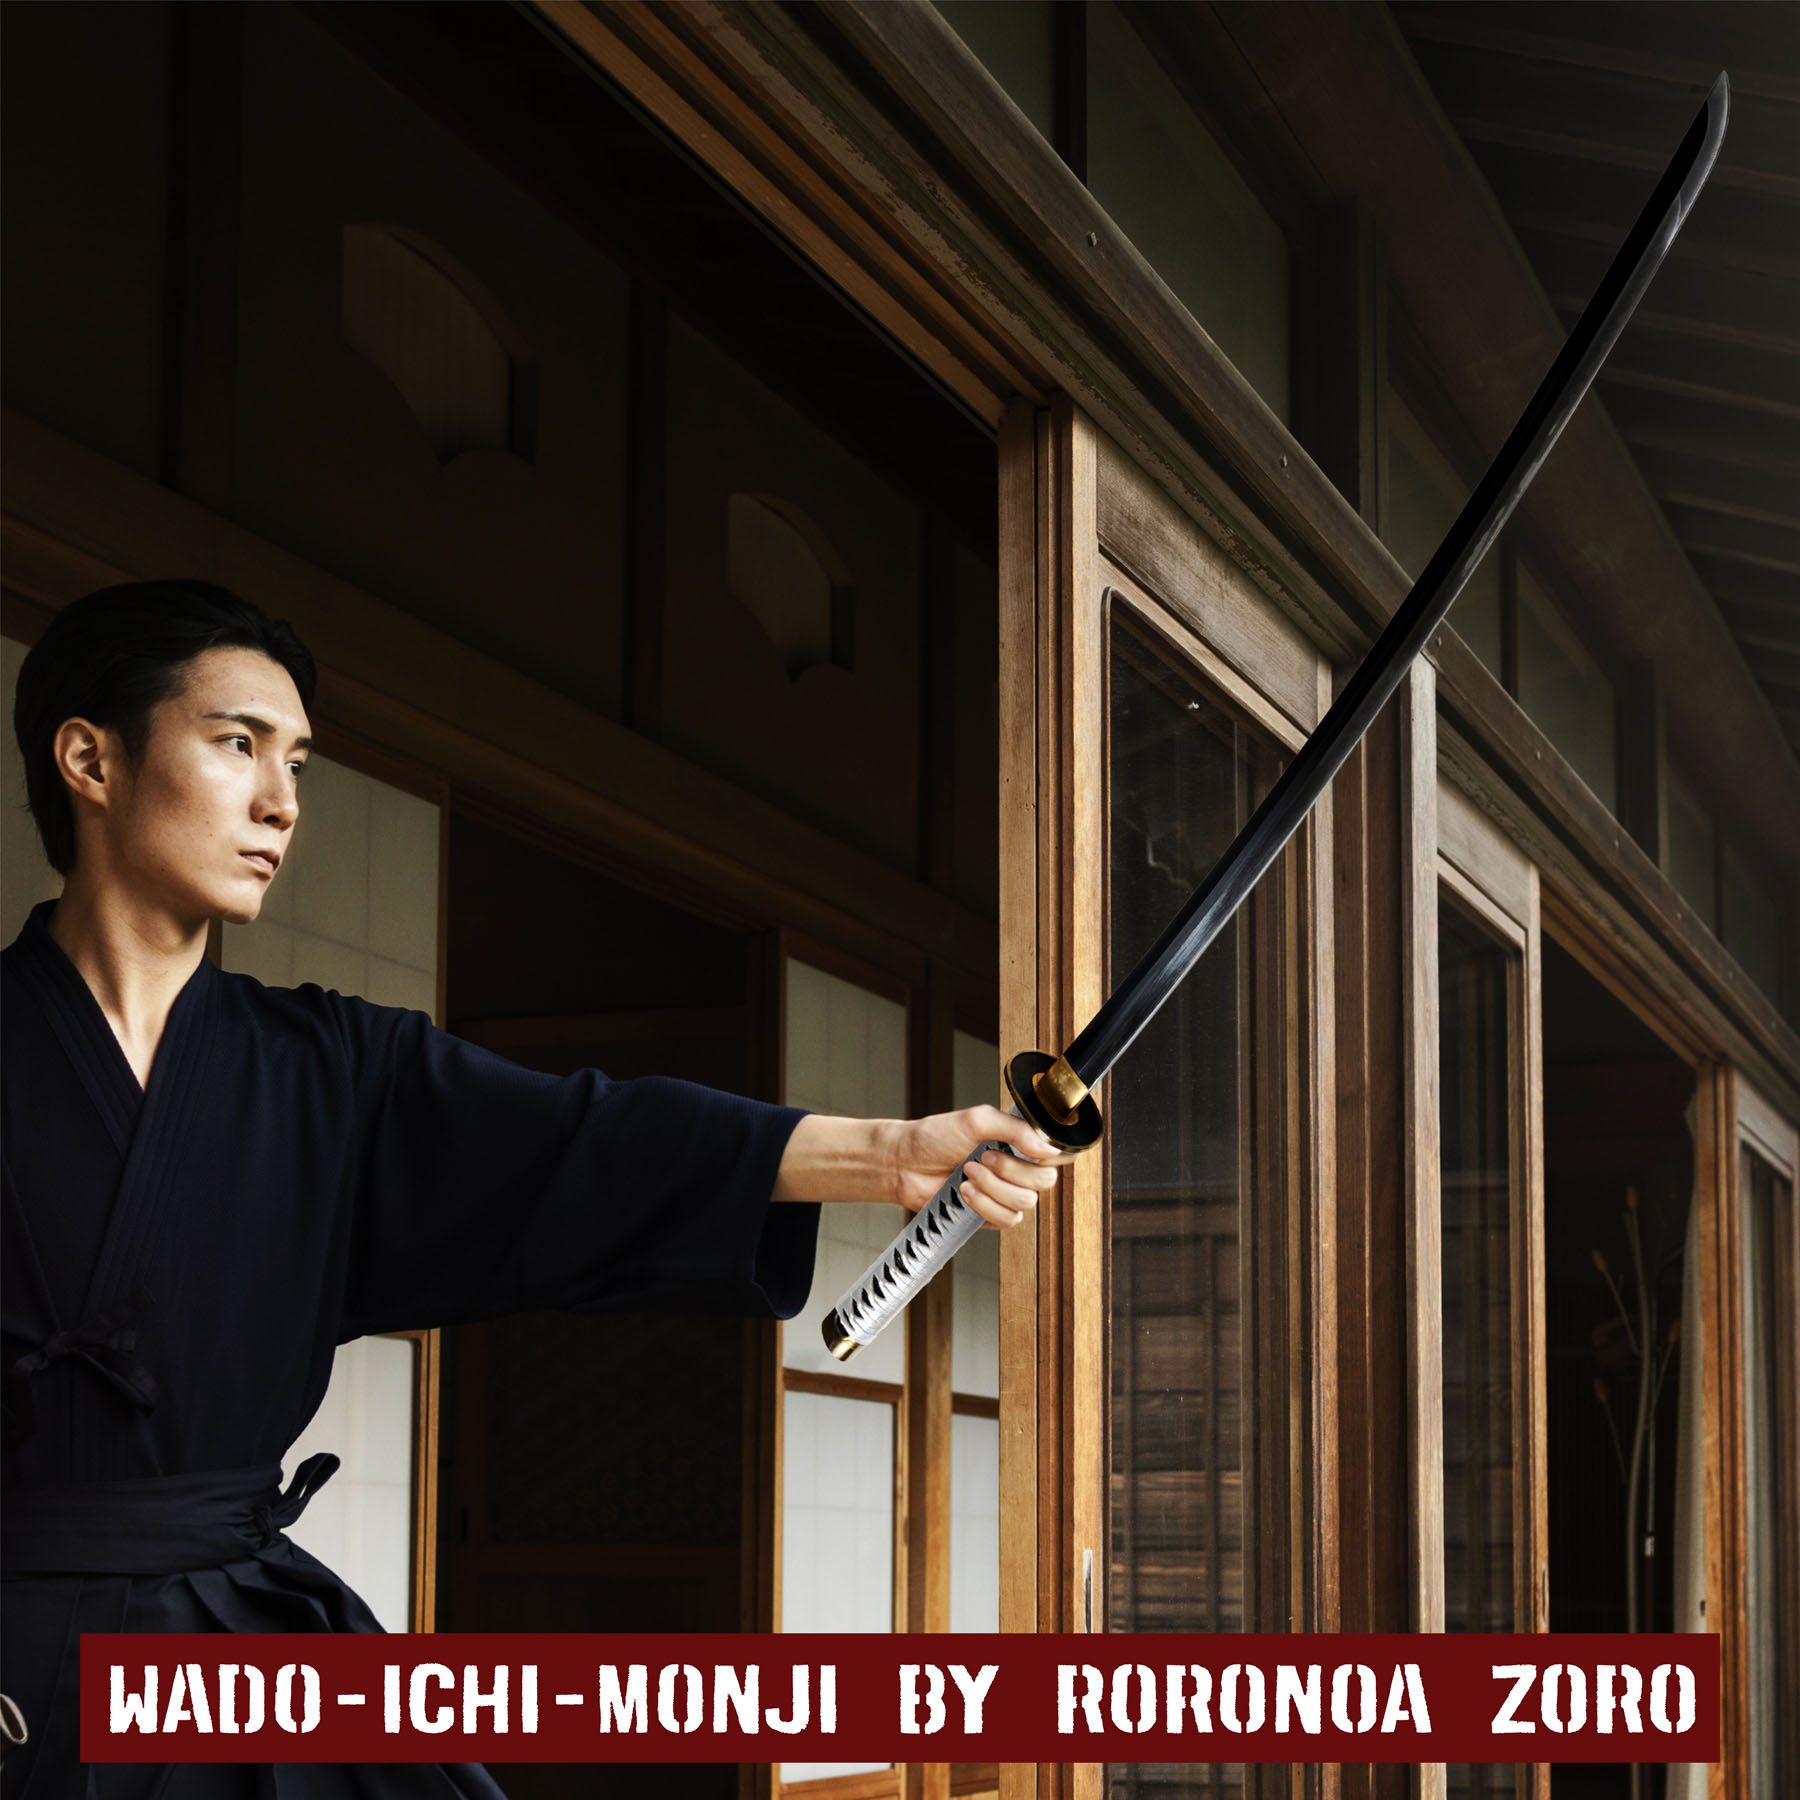 Wado-Ichi-Monji by Roronoa Zoro katana - handforged